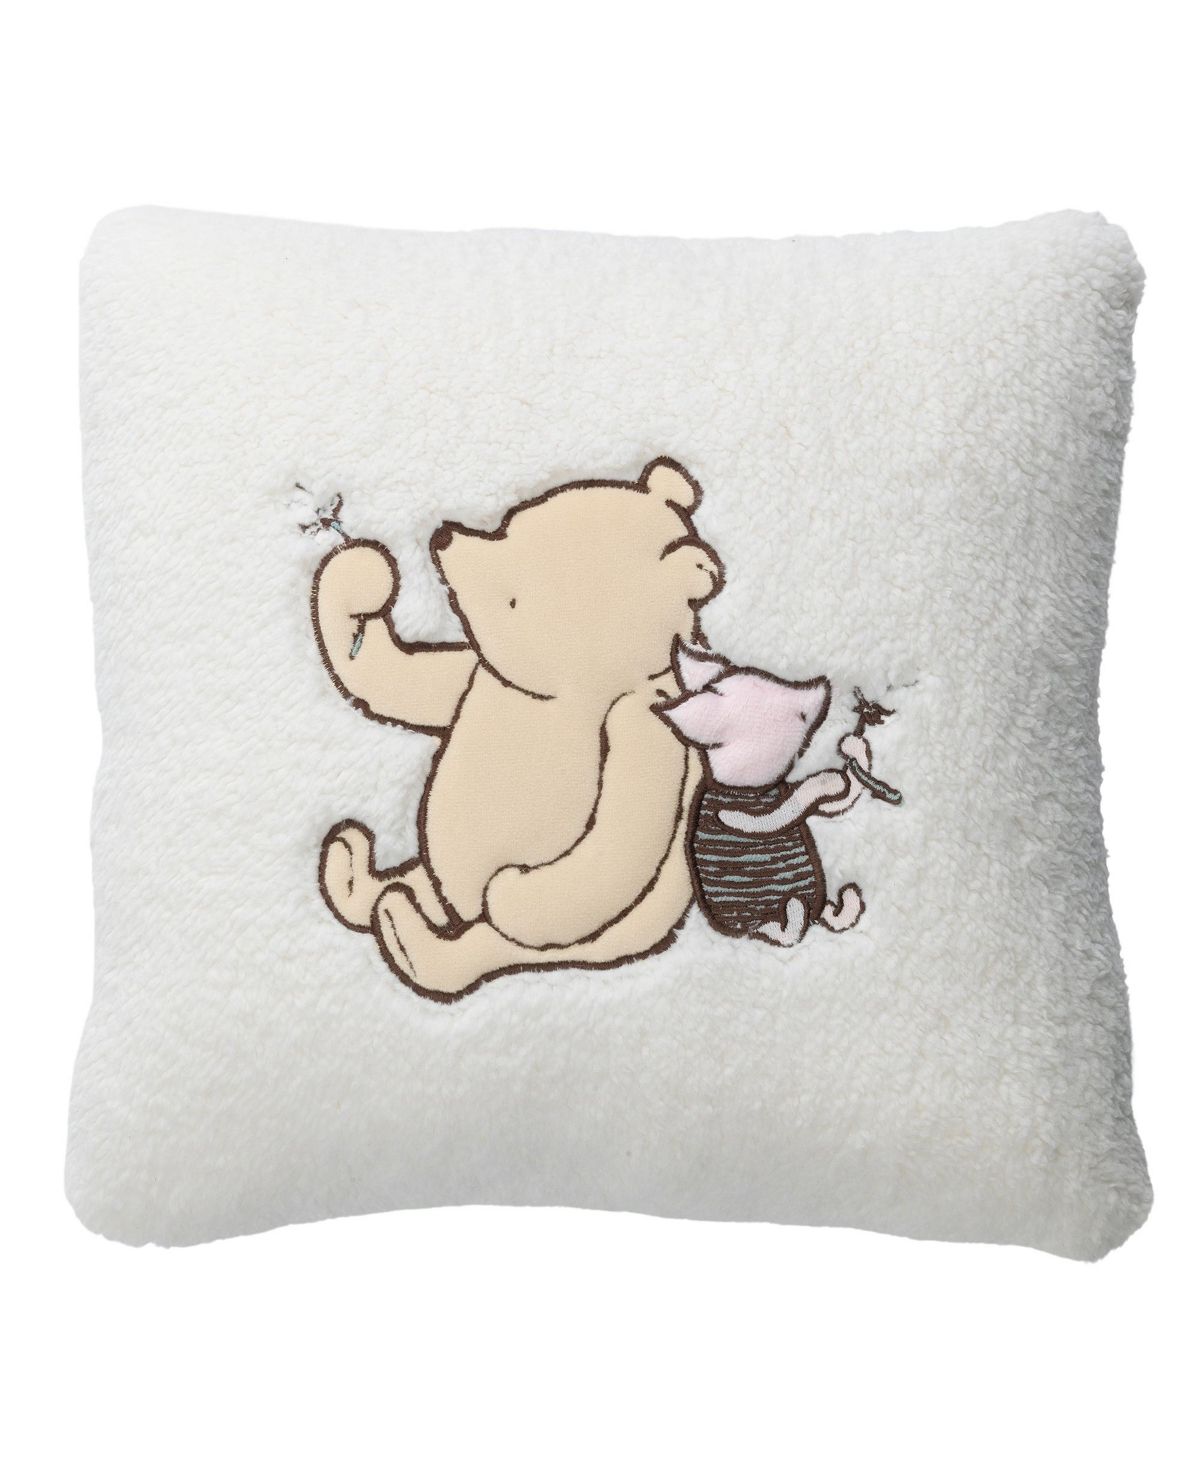 Lambs & Ivy Storytime Pooh Soft Sherpa Nursery Throw Pillow - Cream | Macys (US)